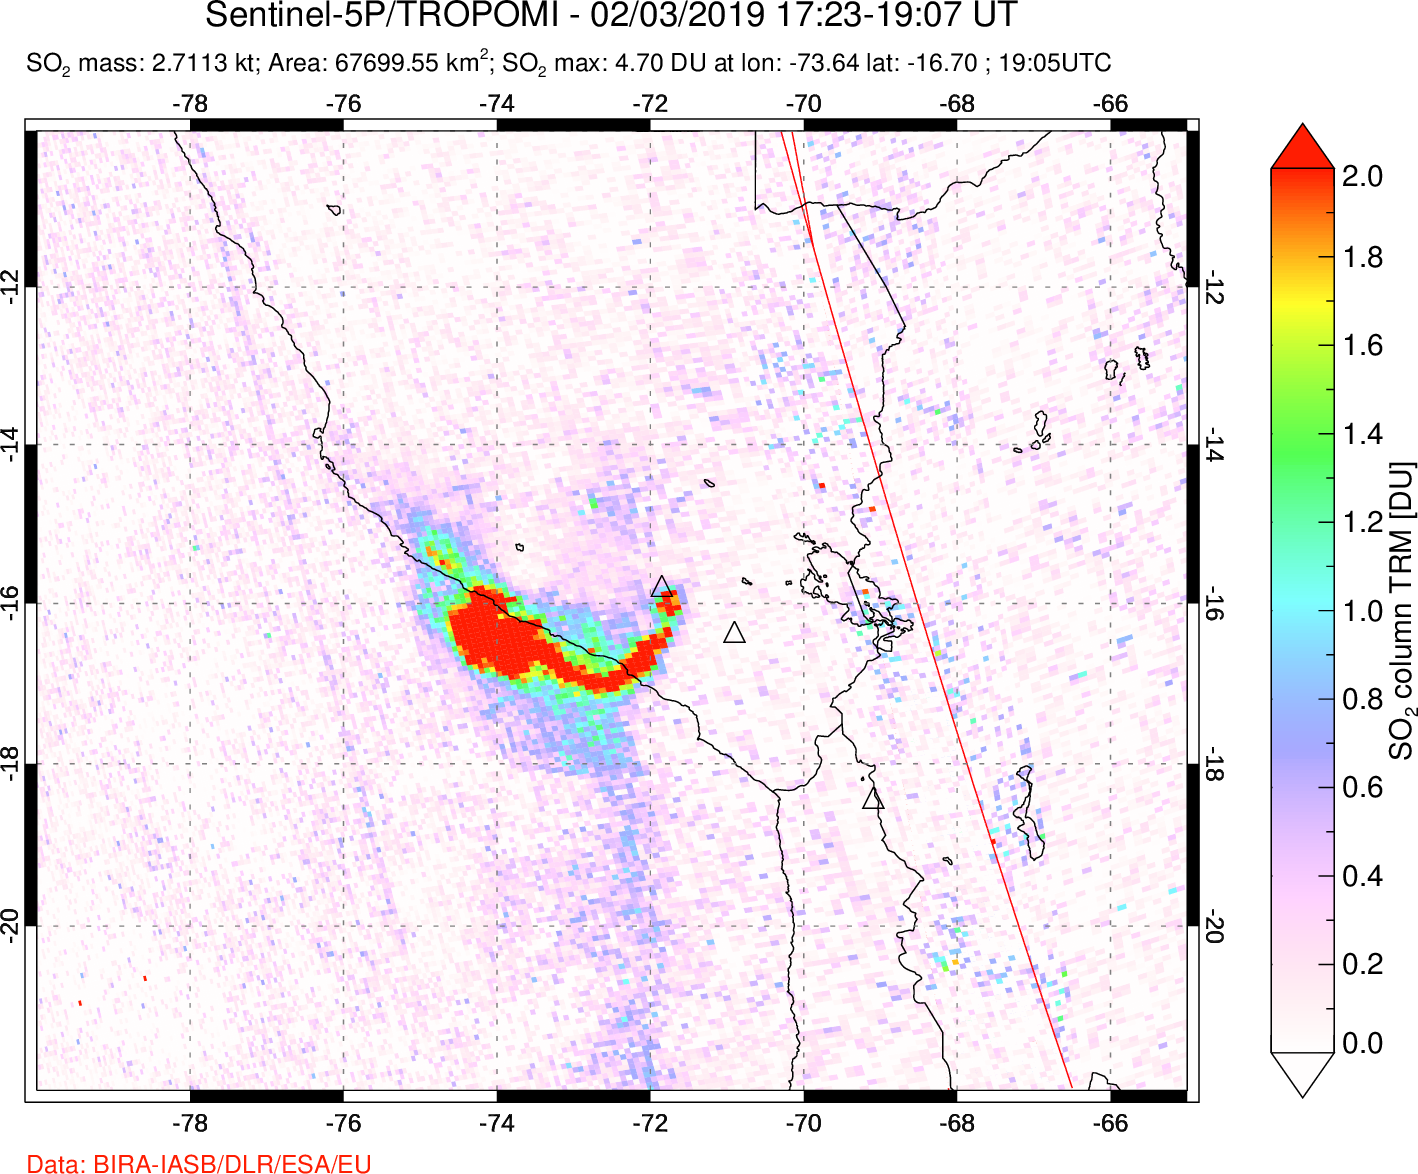 A sulfur dioxide image over Peru on Feb 03, 2019.